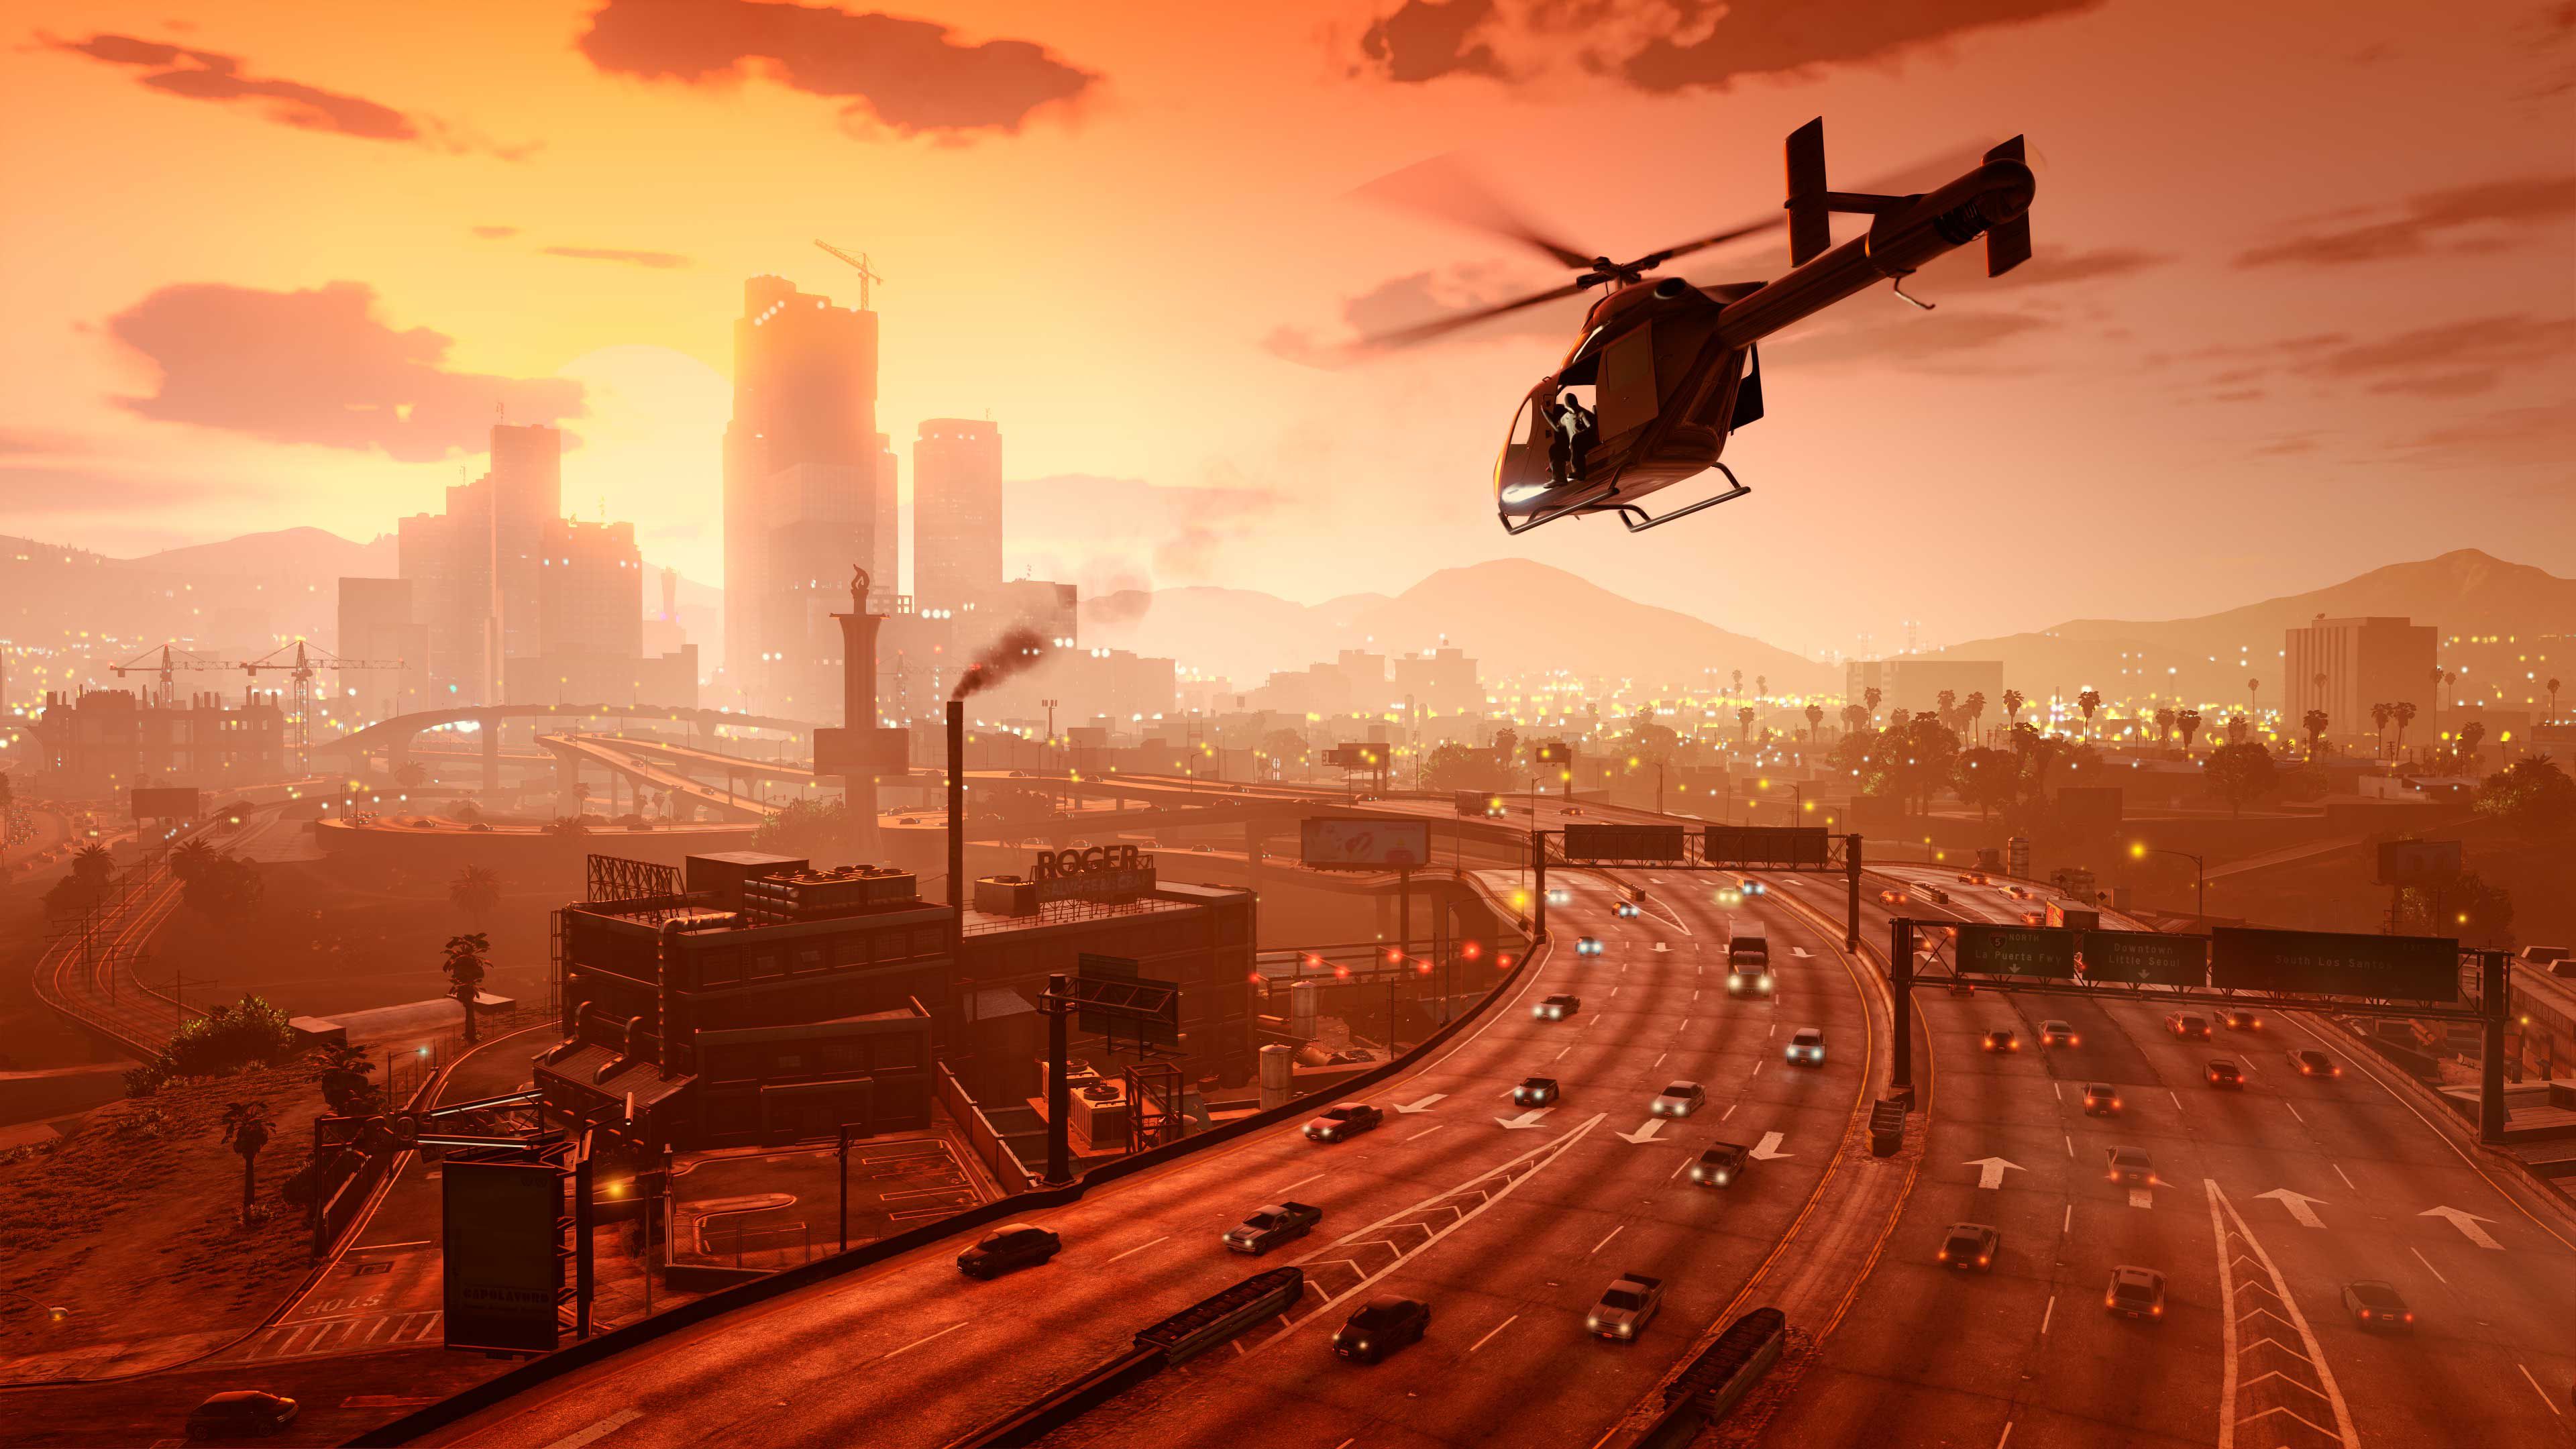 GTA Online: Corridas Metamorfose já disponíveis - Rockstar Games